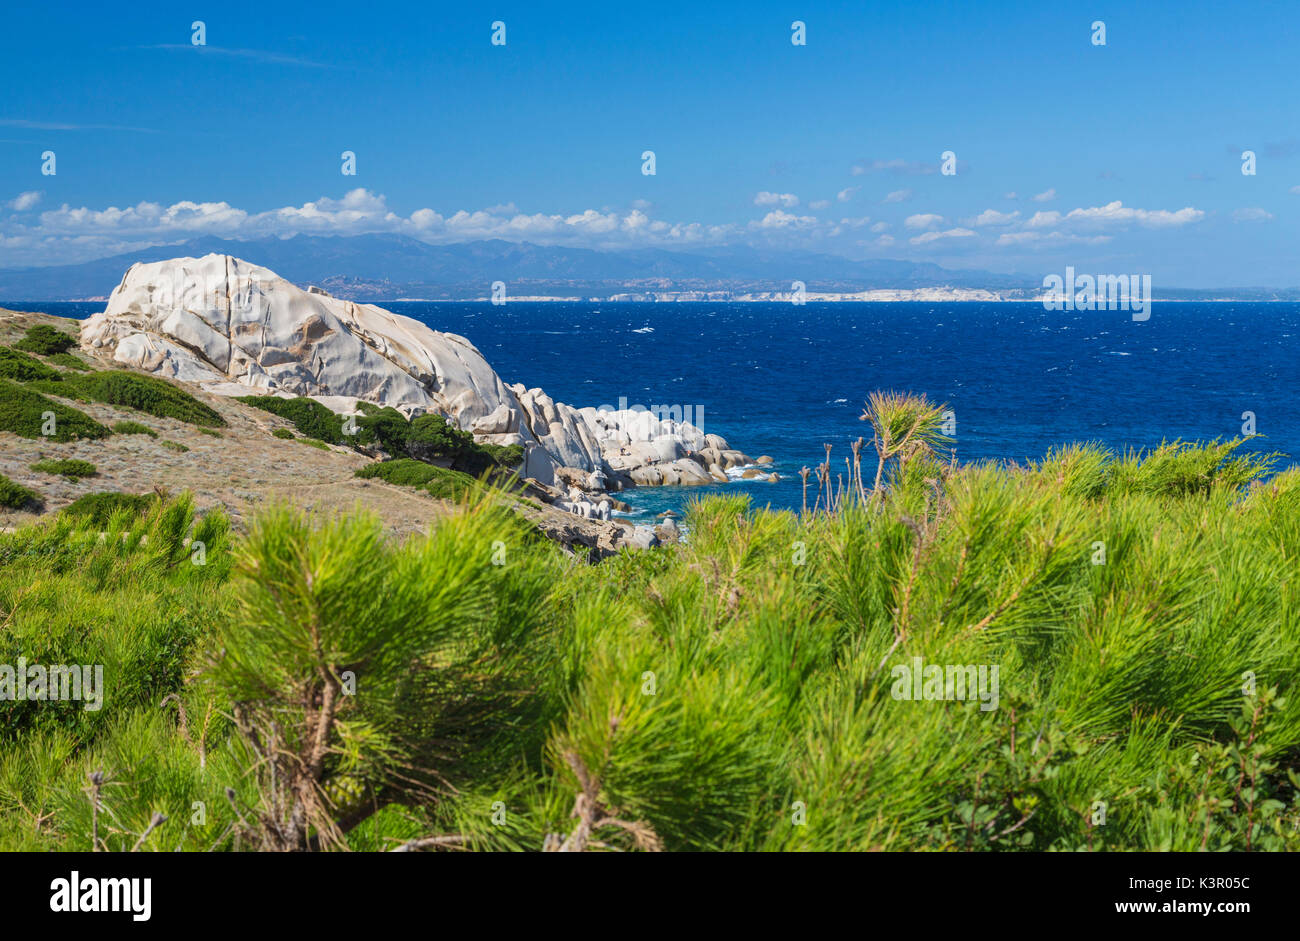 Green plants frame the pristine blue sea and cliffs Capo Testa Santa Teresa di Gallura Sassari Province Sardinia Italy Europe Stock Photo